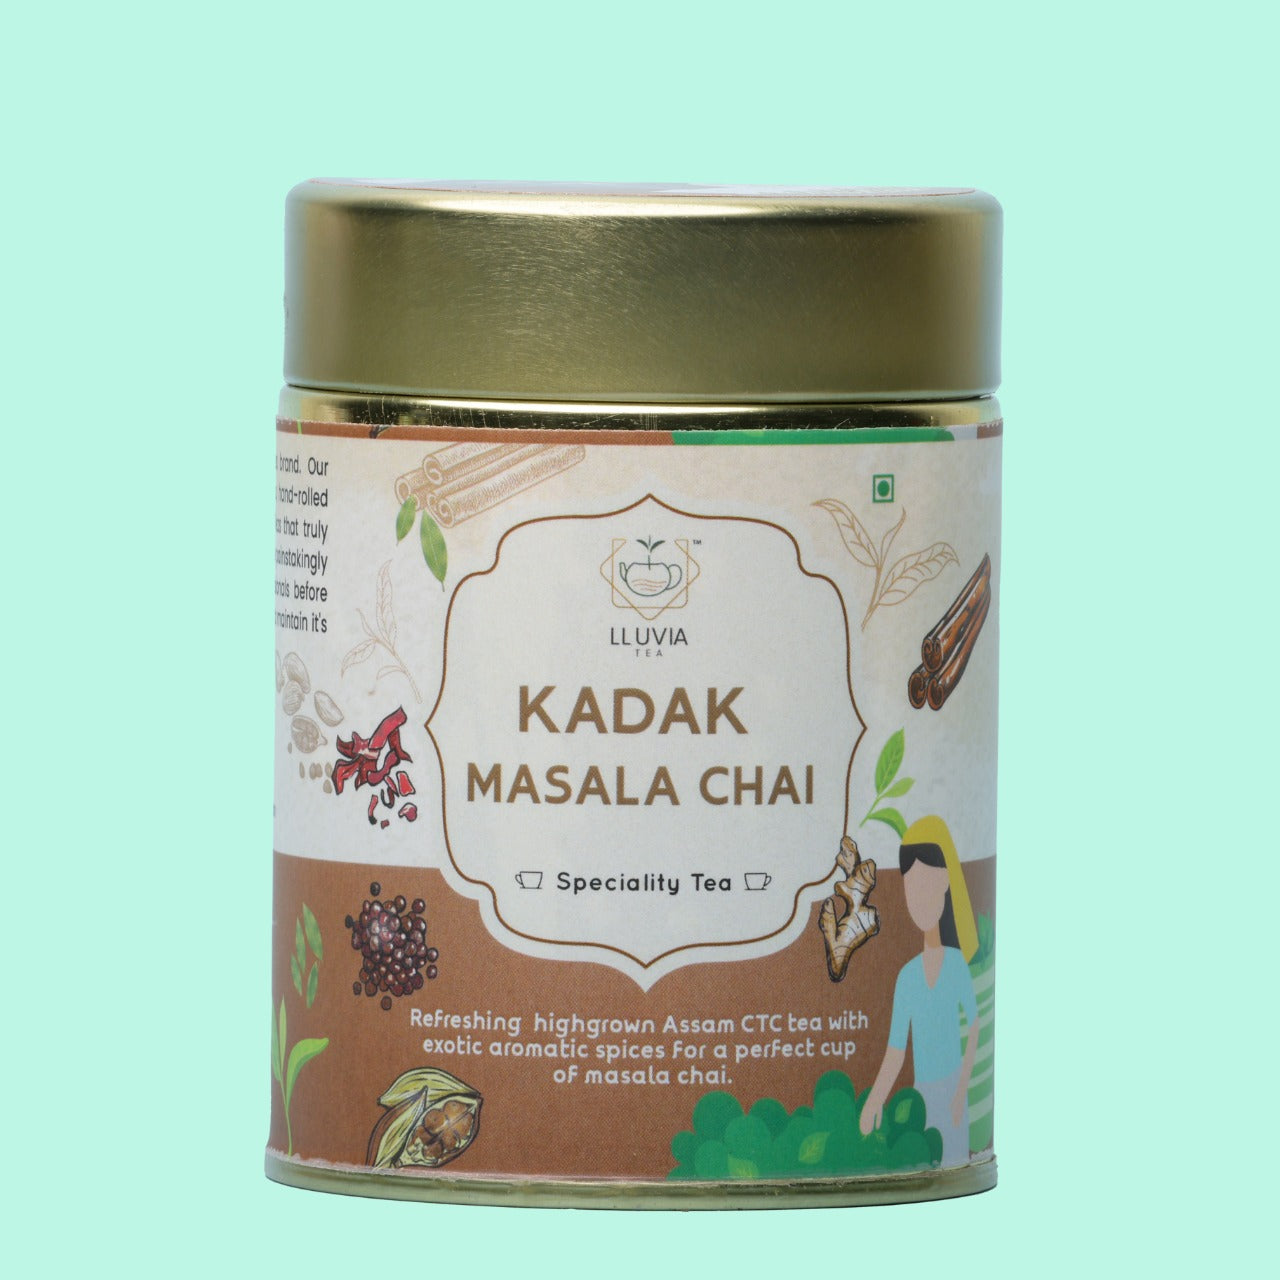 Kadak masala chai | improves metabolism & immunity| 70g